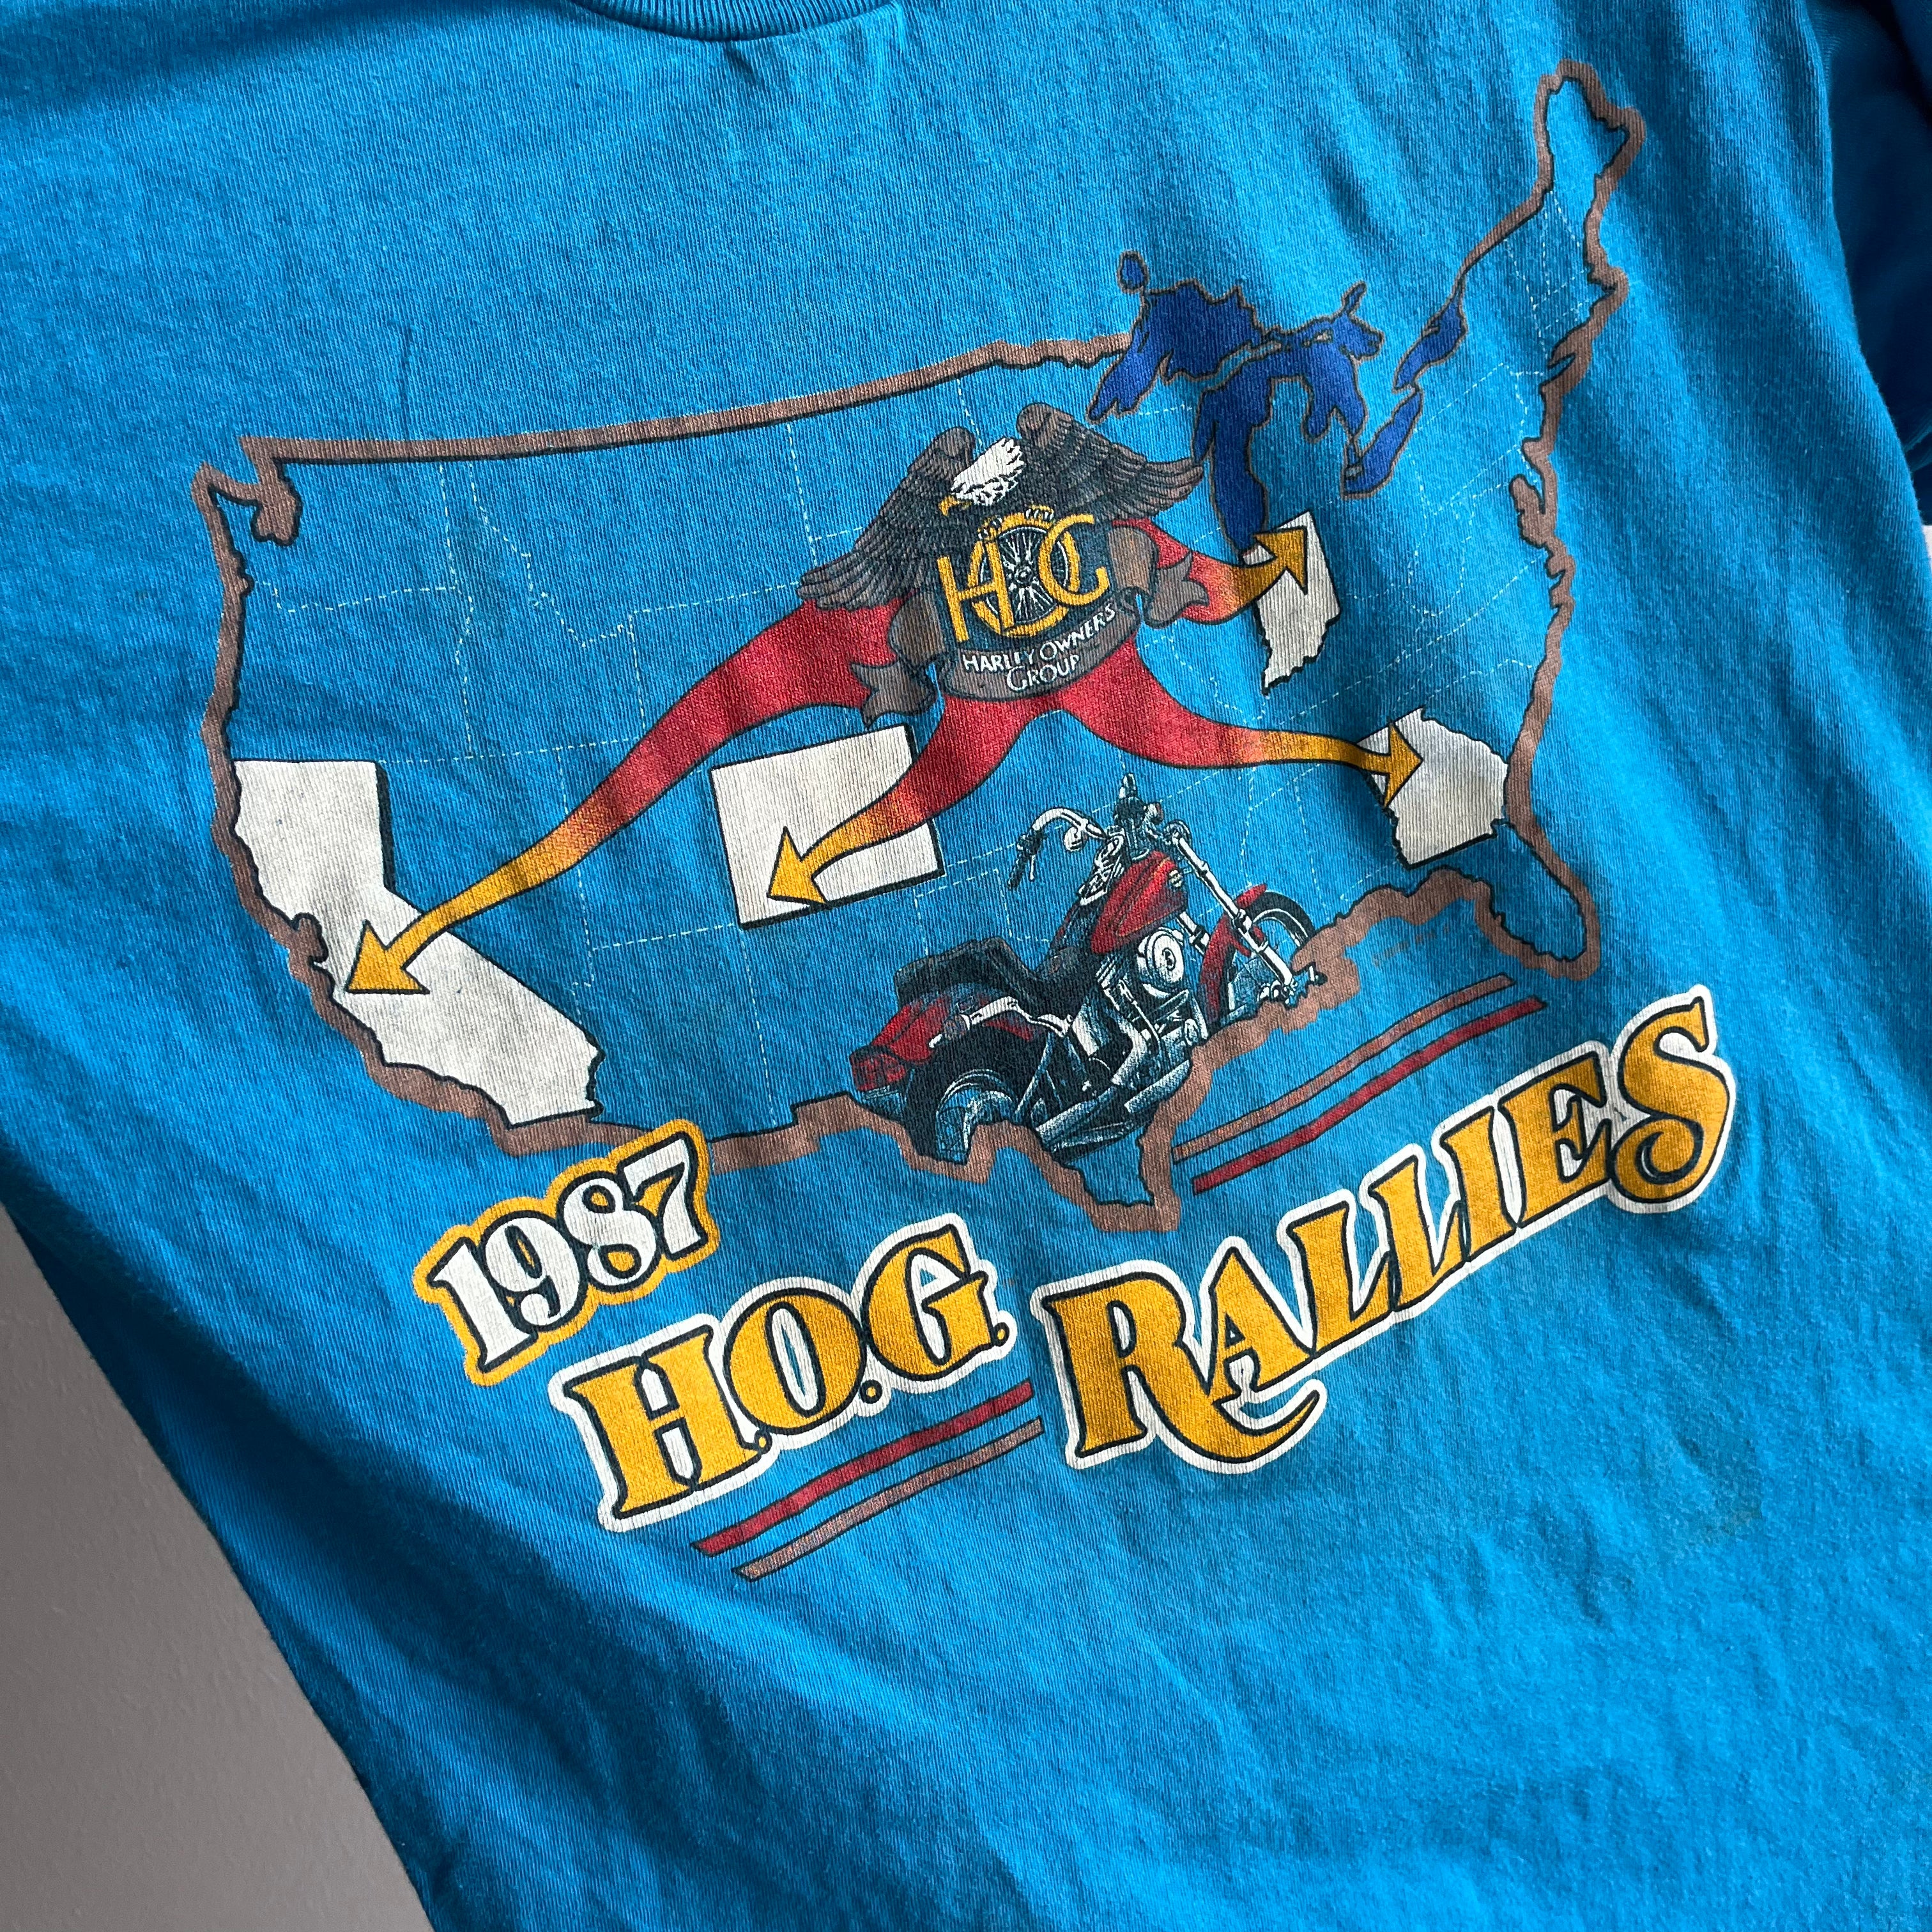 T-shirt Harley Rallyes HOG 1987 - WOWZA